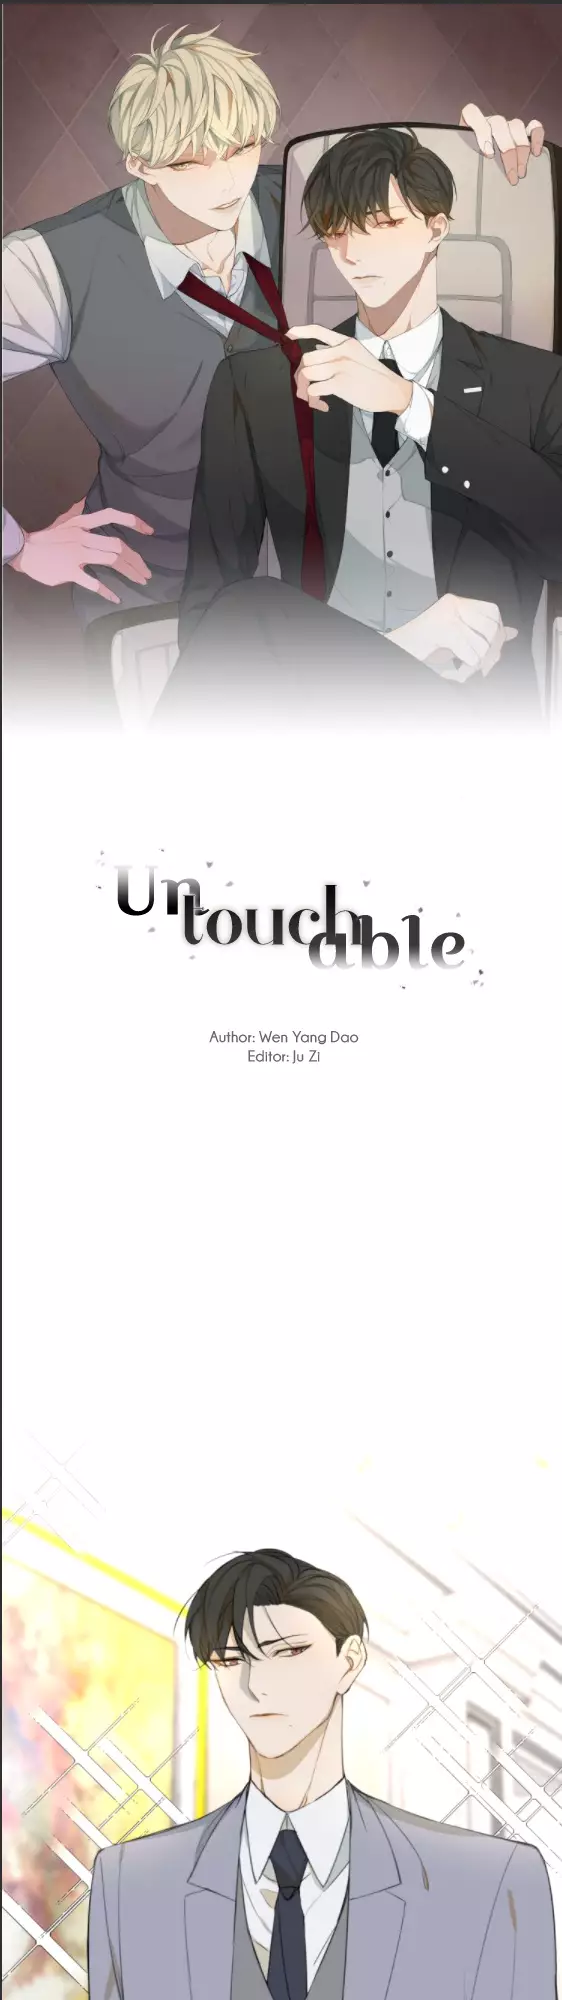 Untouchable - 22 page 1-71173a0e